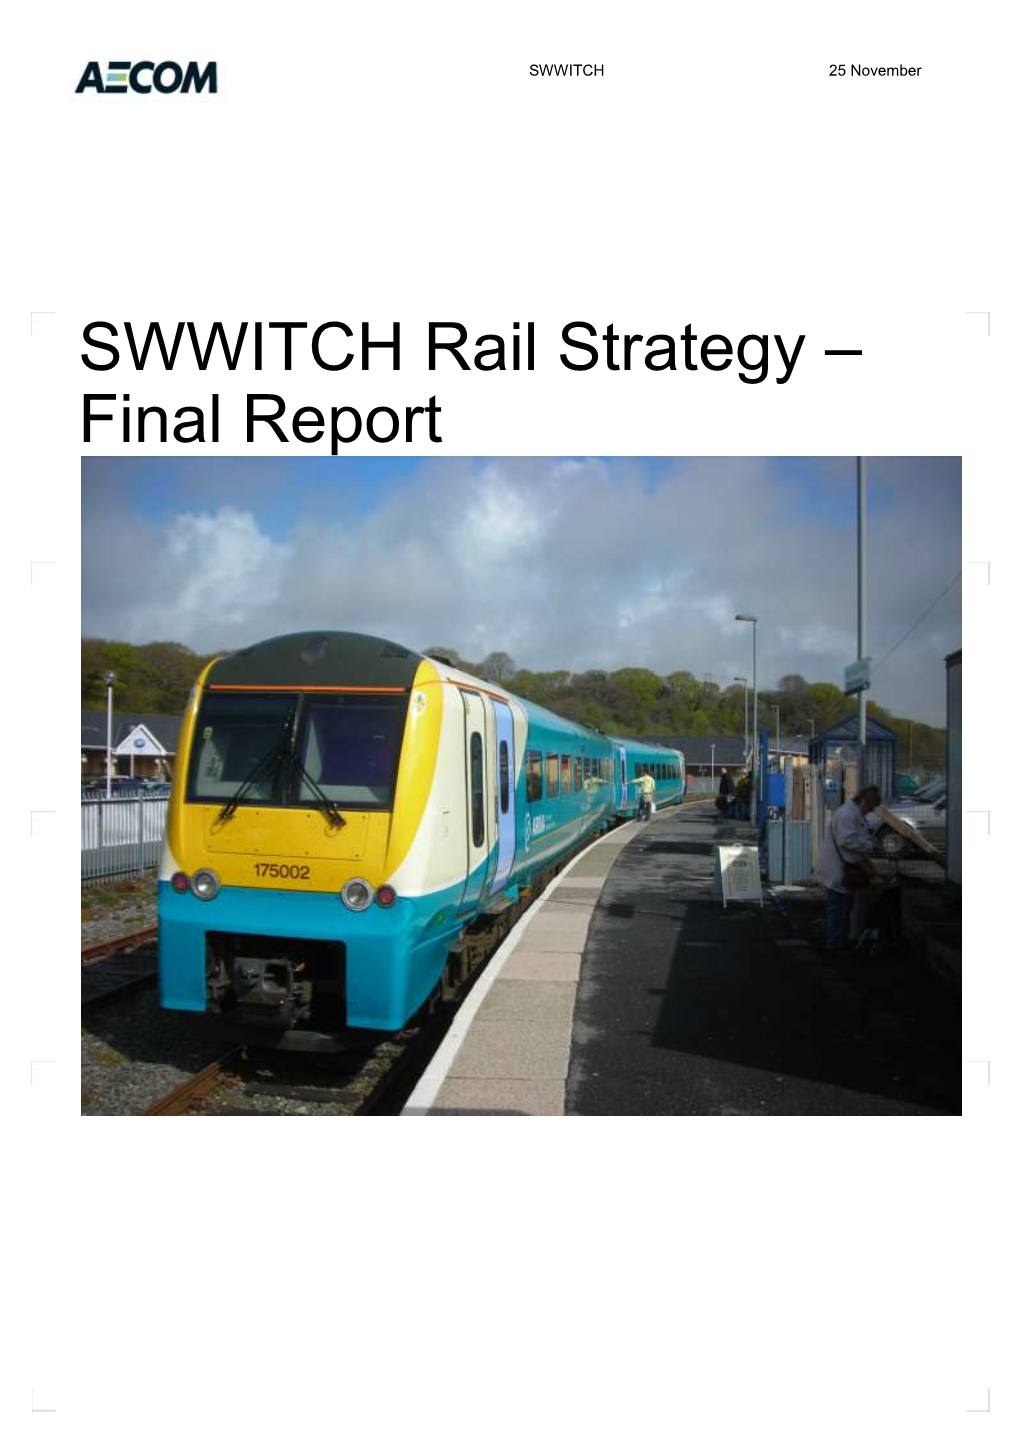 SWWITCH Rail Strategy – Final Report